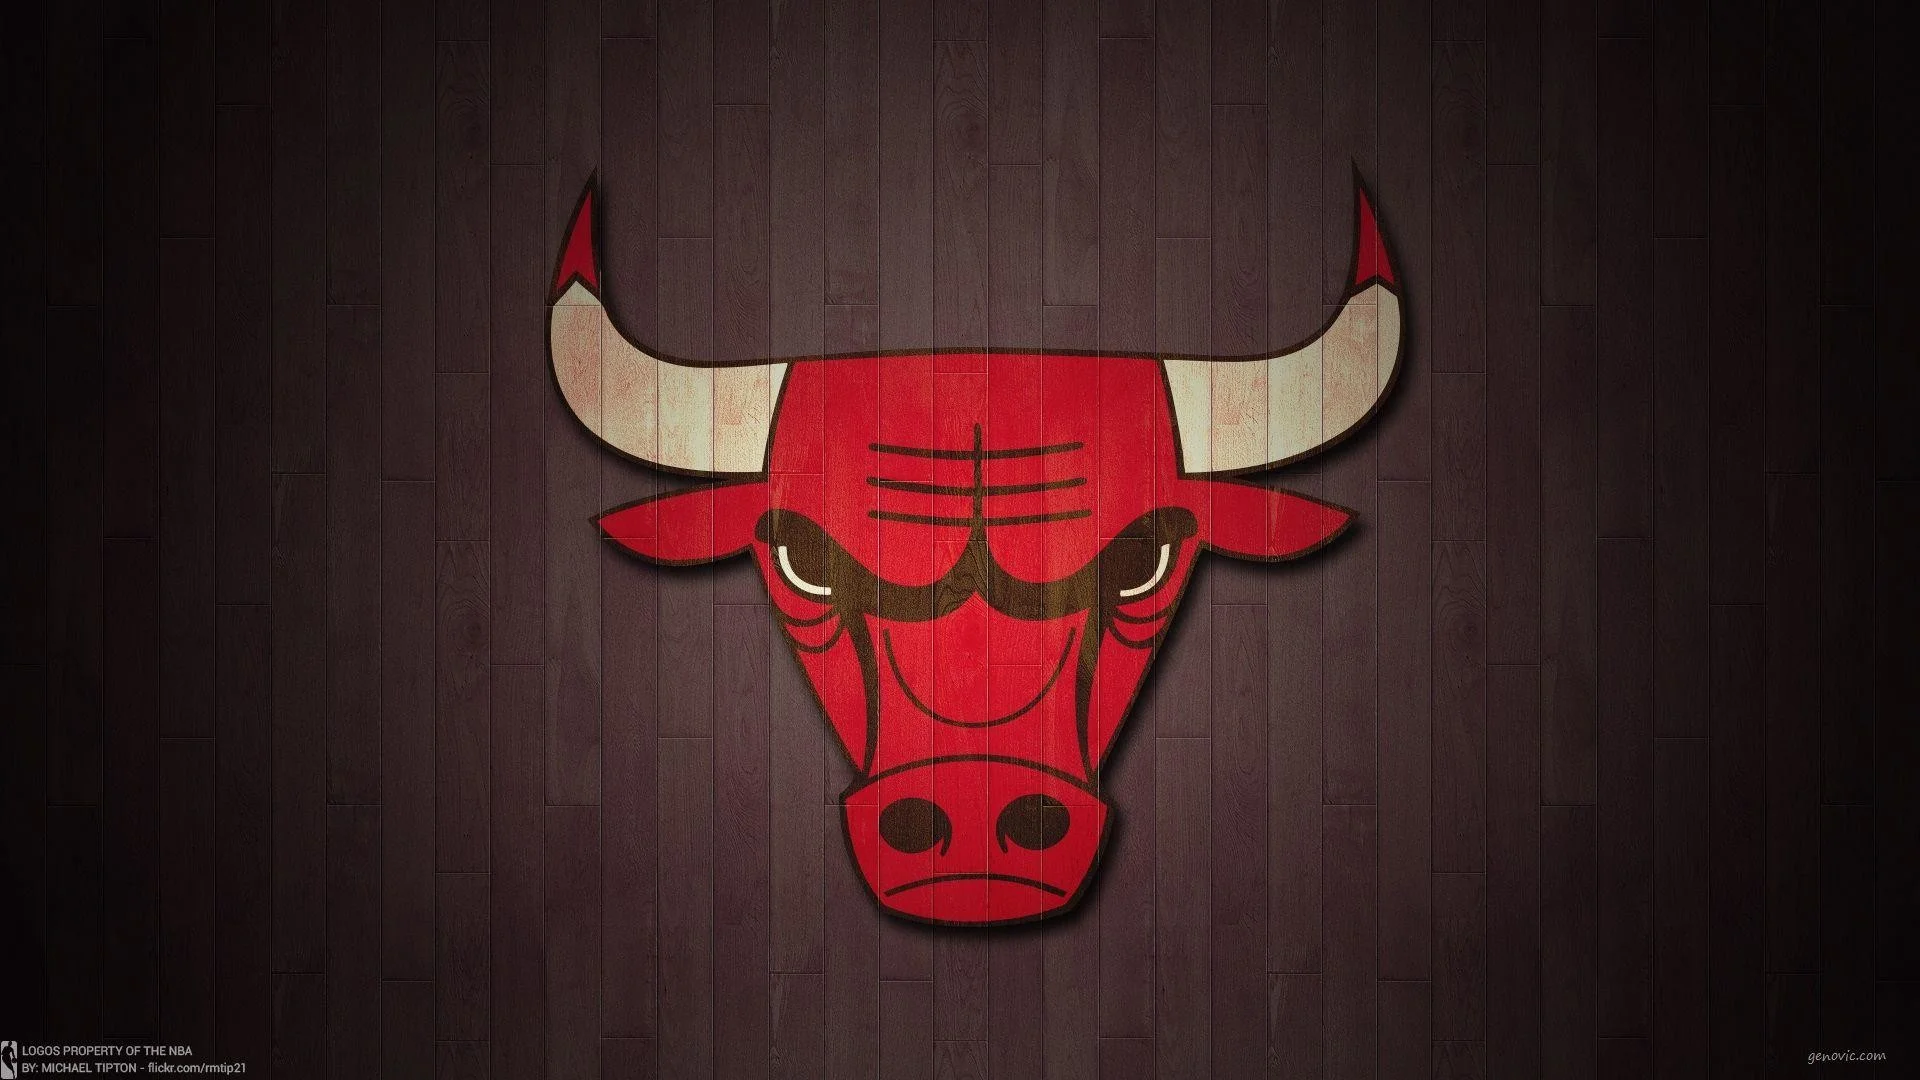 Chicago Bulls Logo Wallpaper HD for iPhone, Laptop, iPad, Mobile .